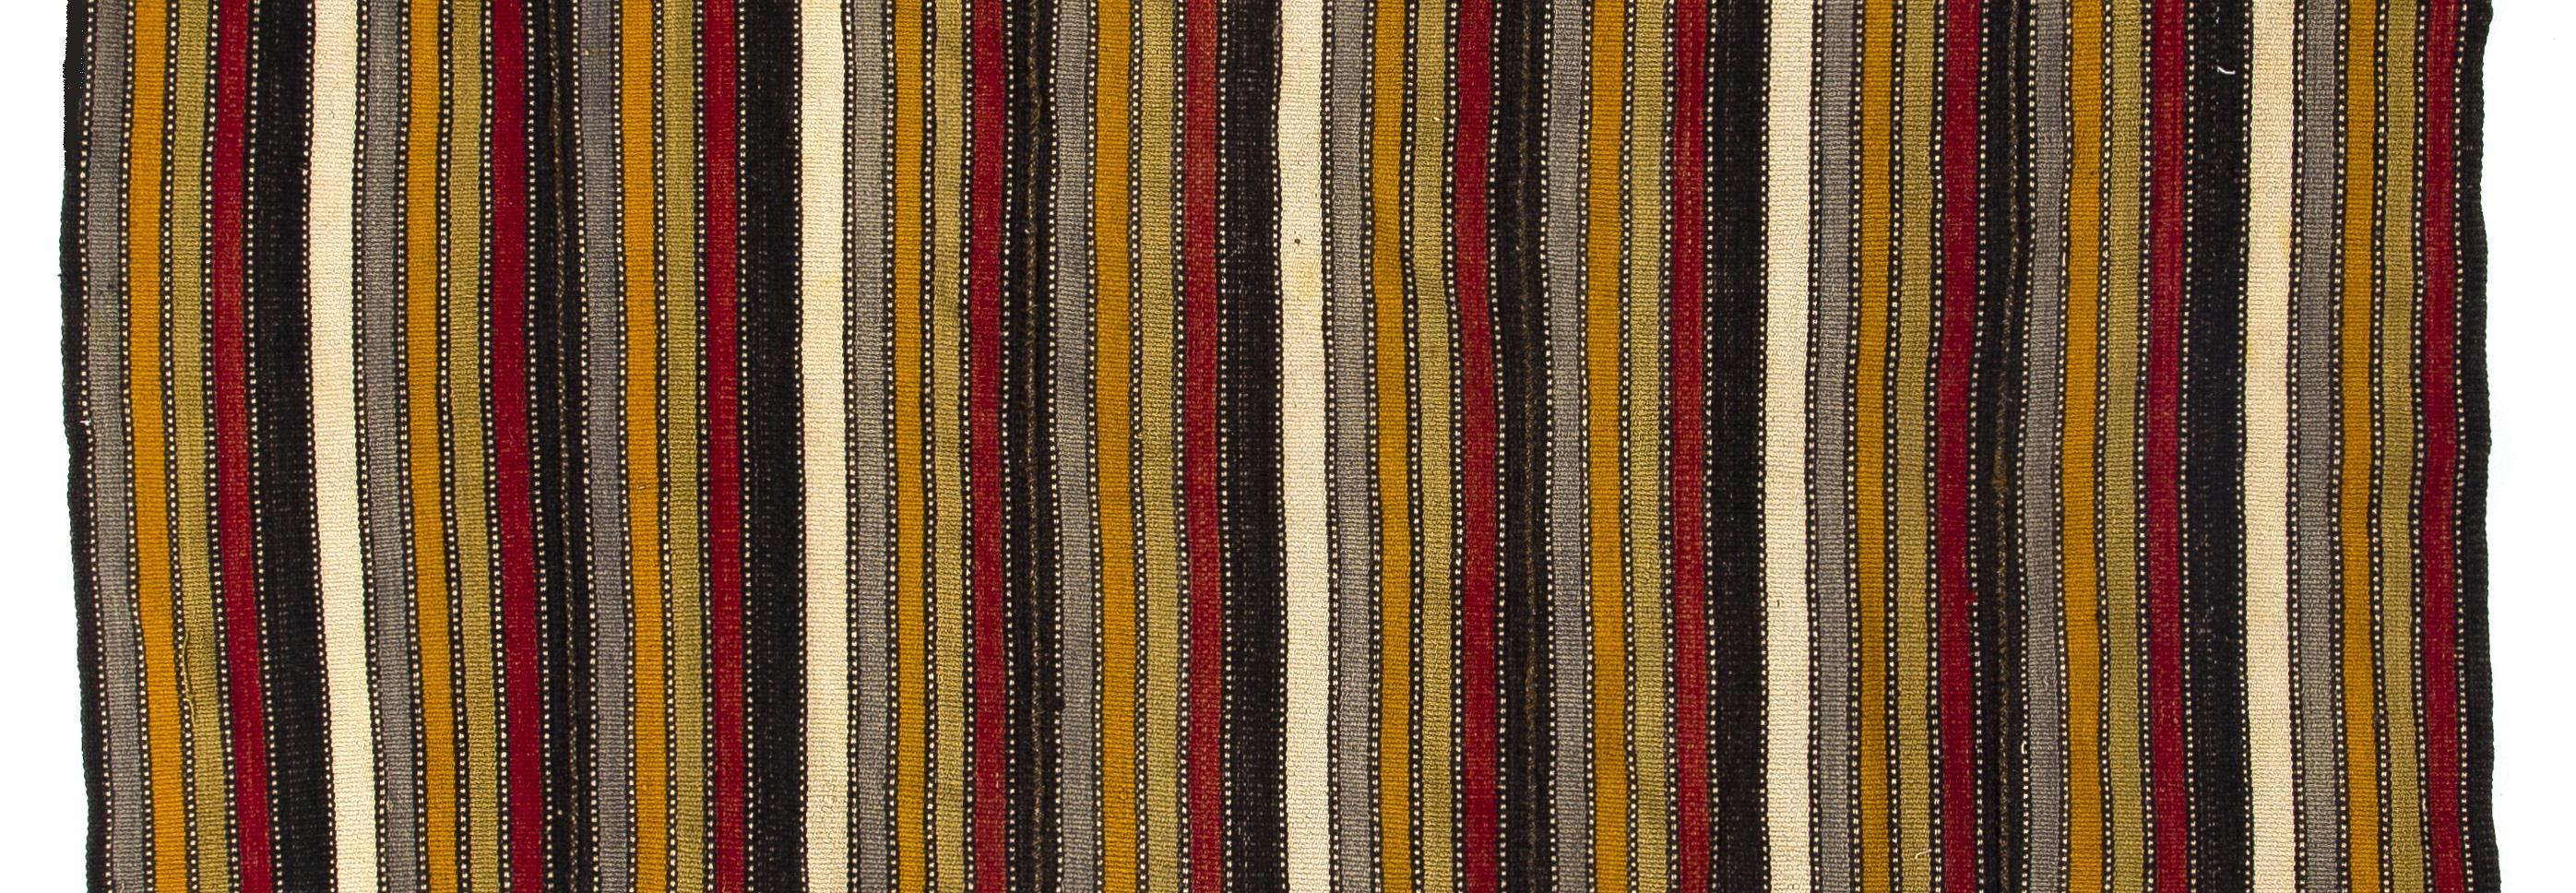 Turkish 5.7x5.9 ft Handwoven Striped Vintage Kilim Rug, Flat-Weave Wool Floor Covering For Sale